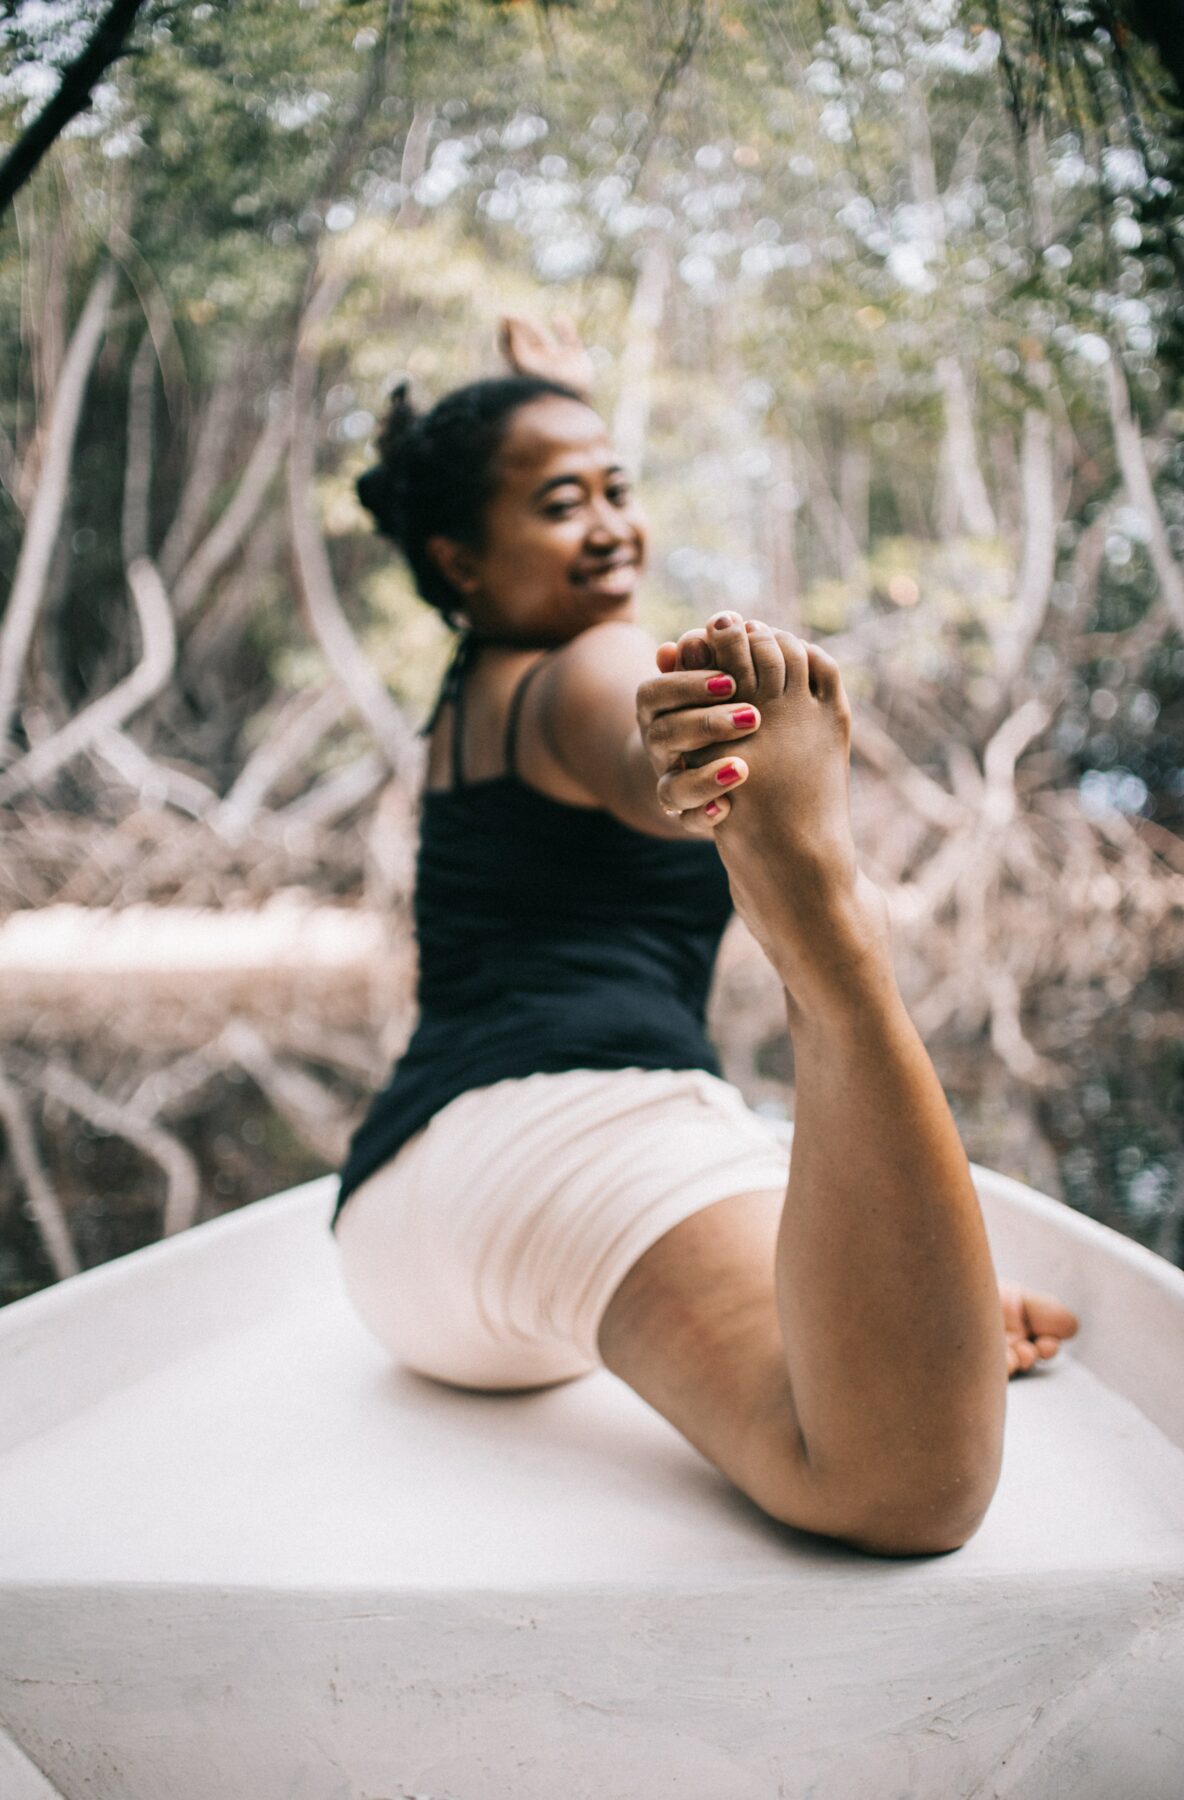 Woman smiling while doing yoga.